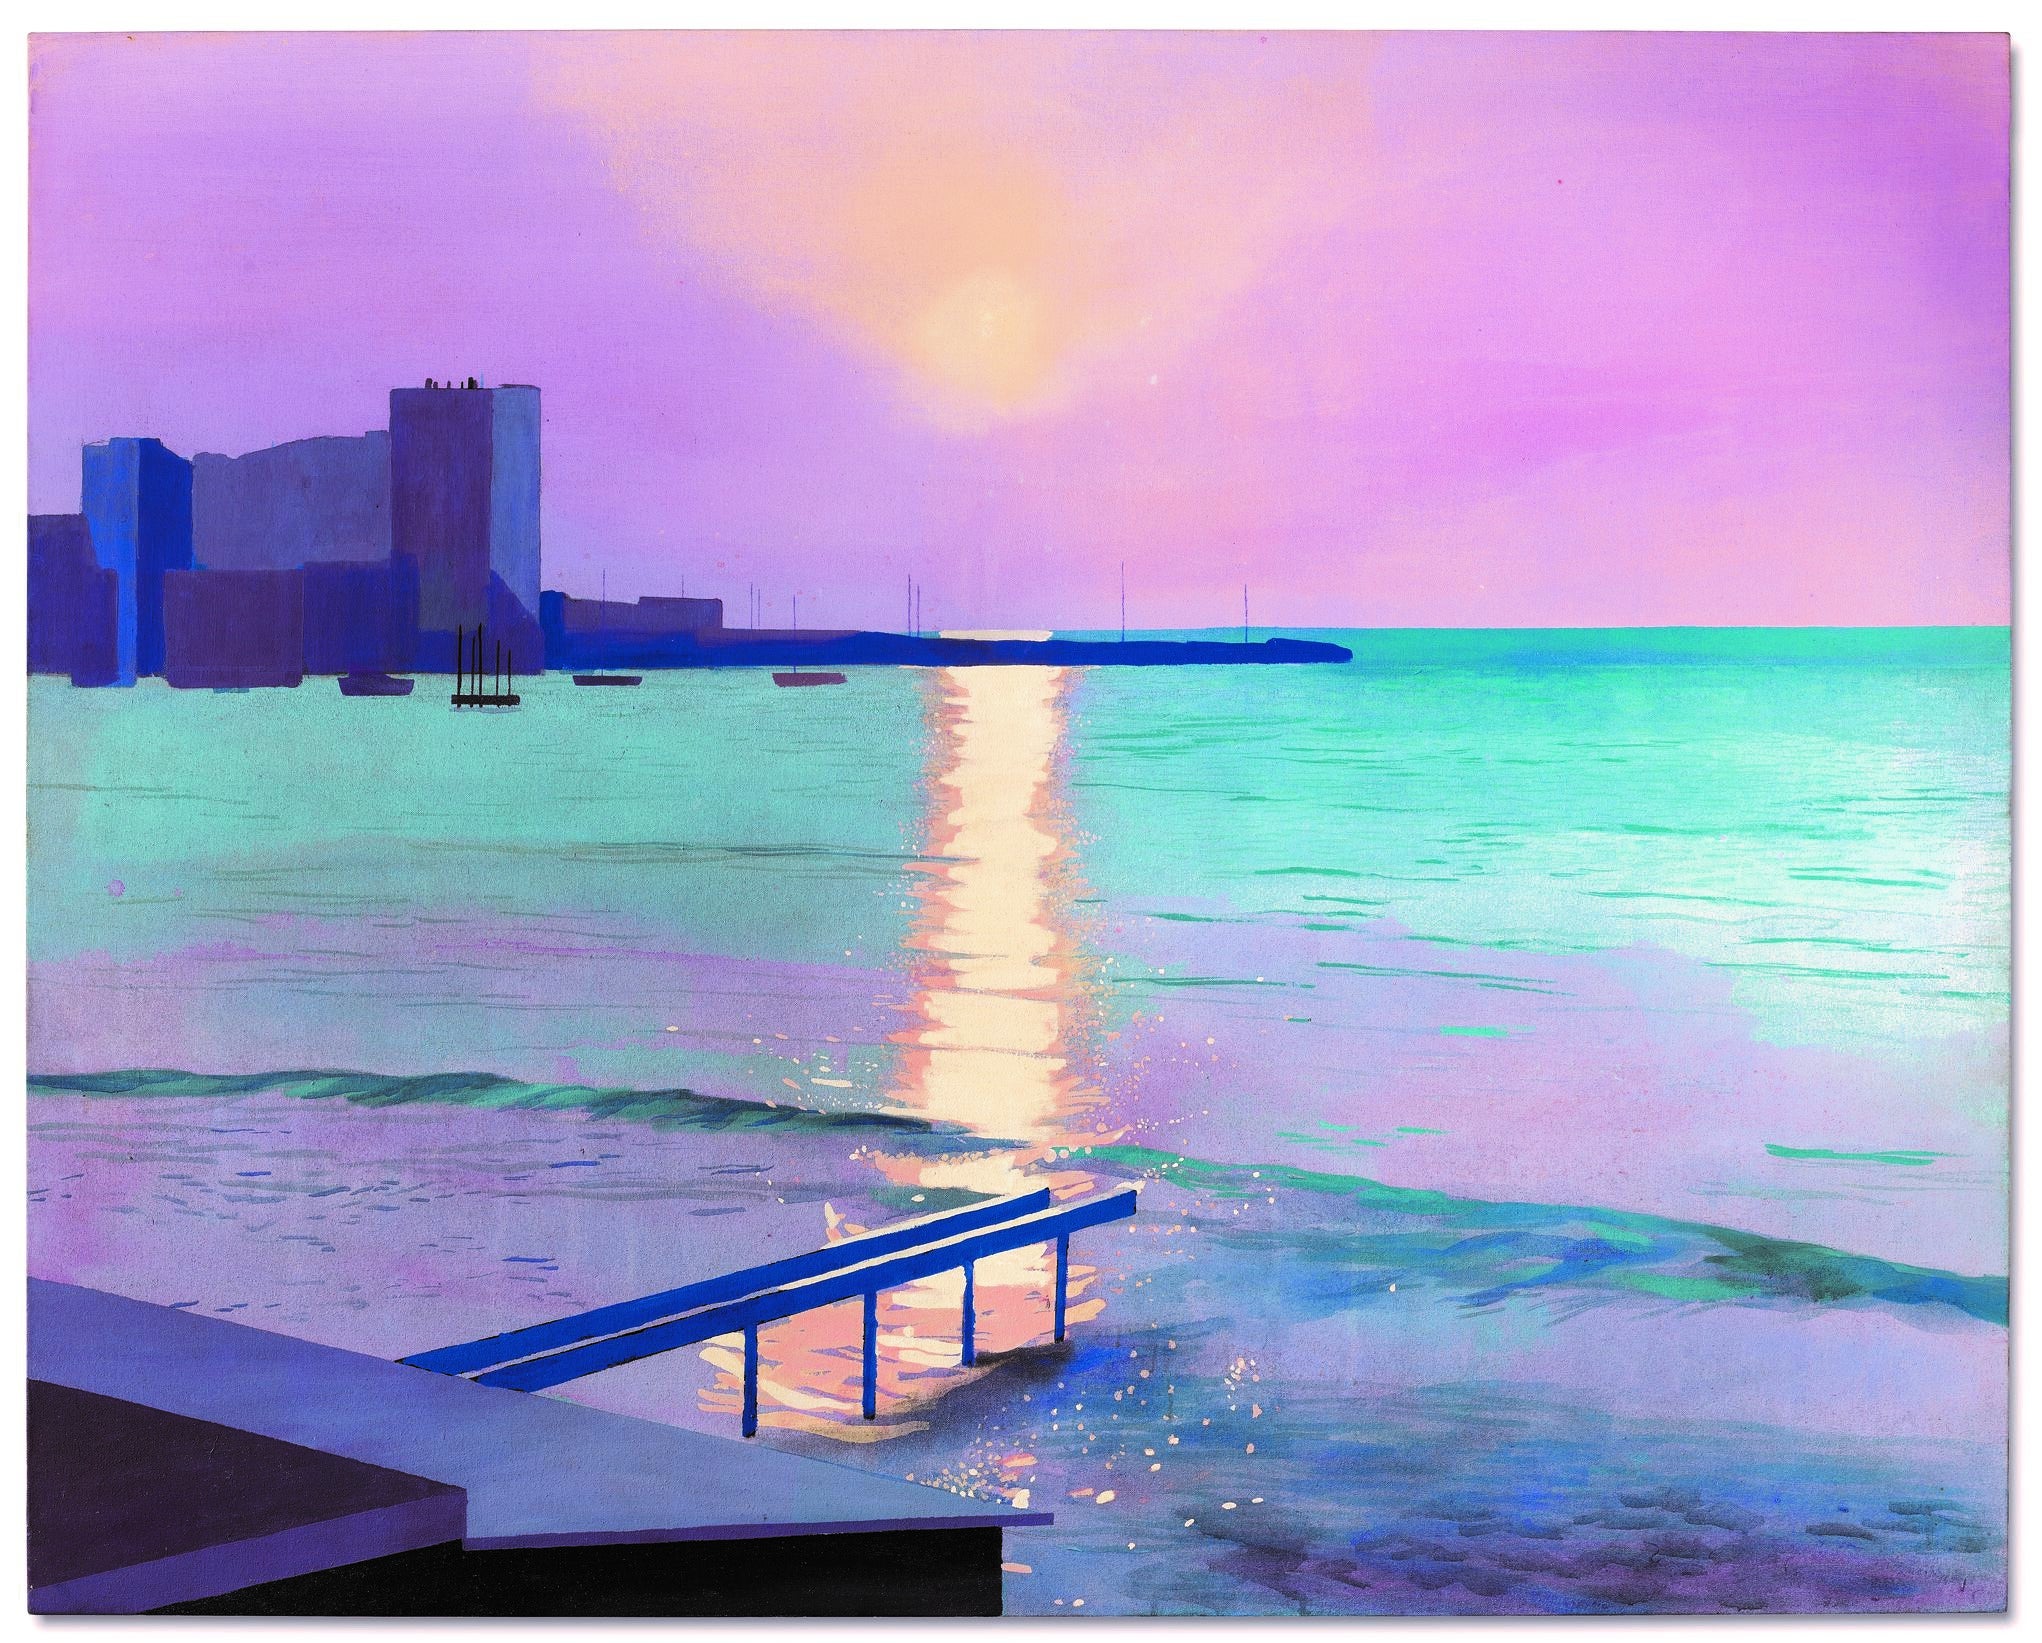 David Hockney’s Early Morning, Sainte-Maxime (Christie’s/PA)